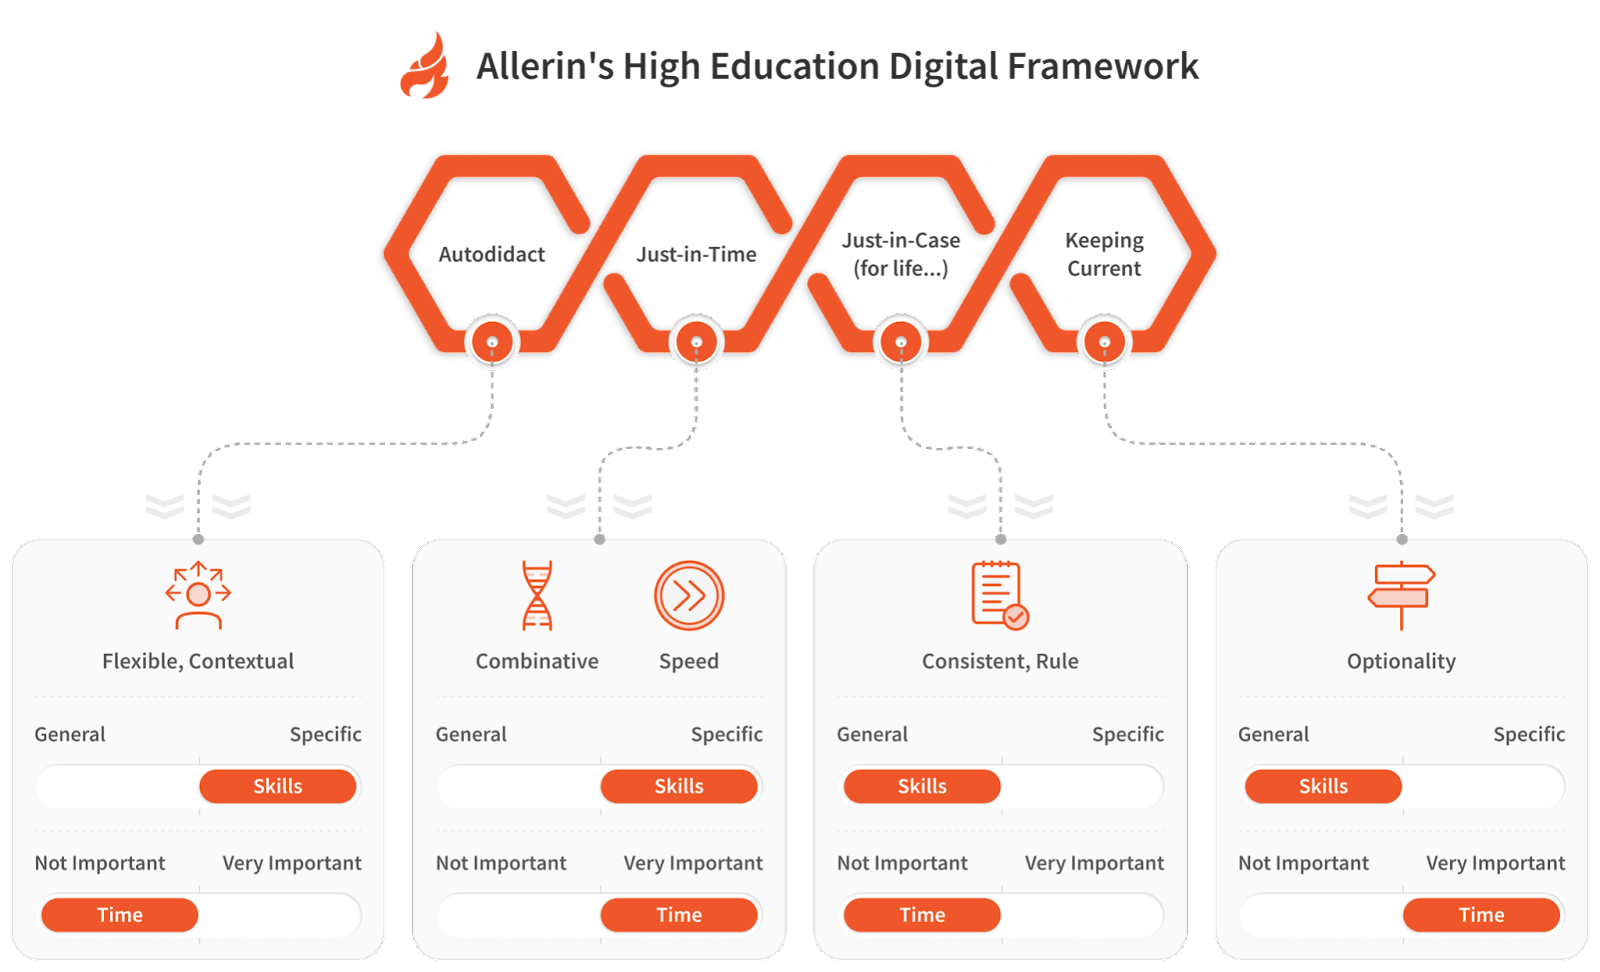 Allerin's High Education Digital Framework